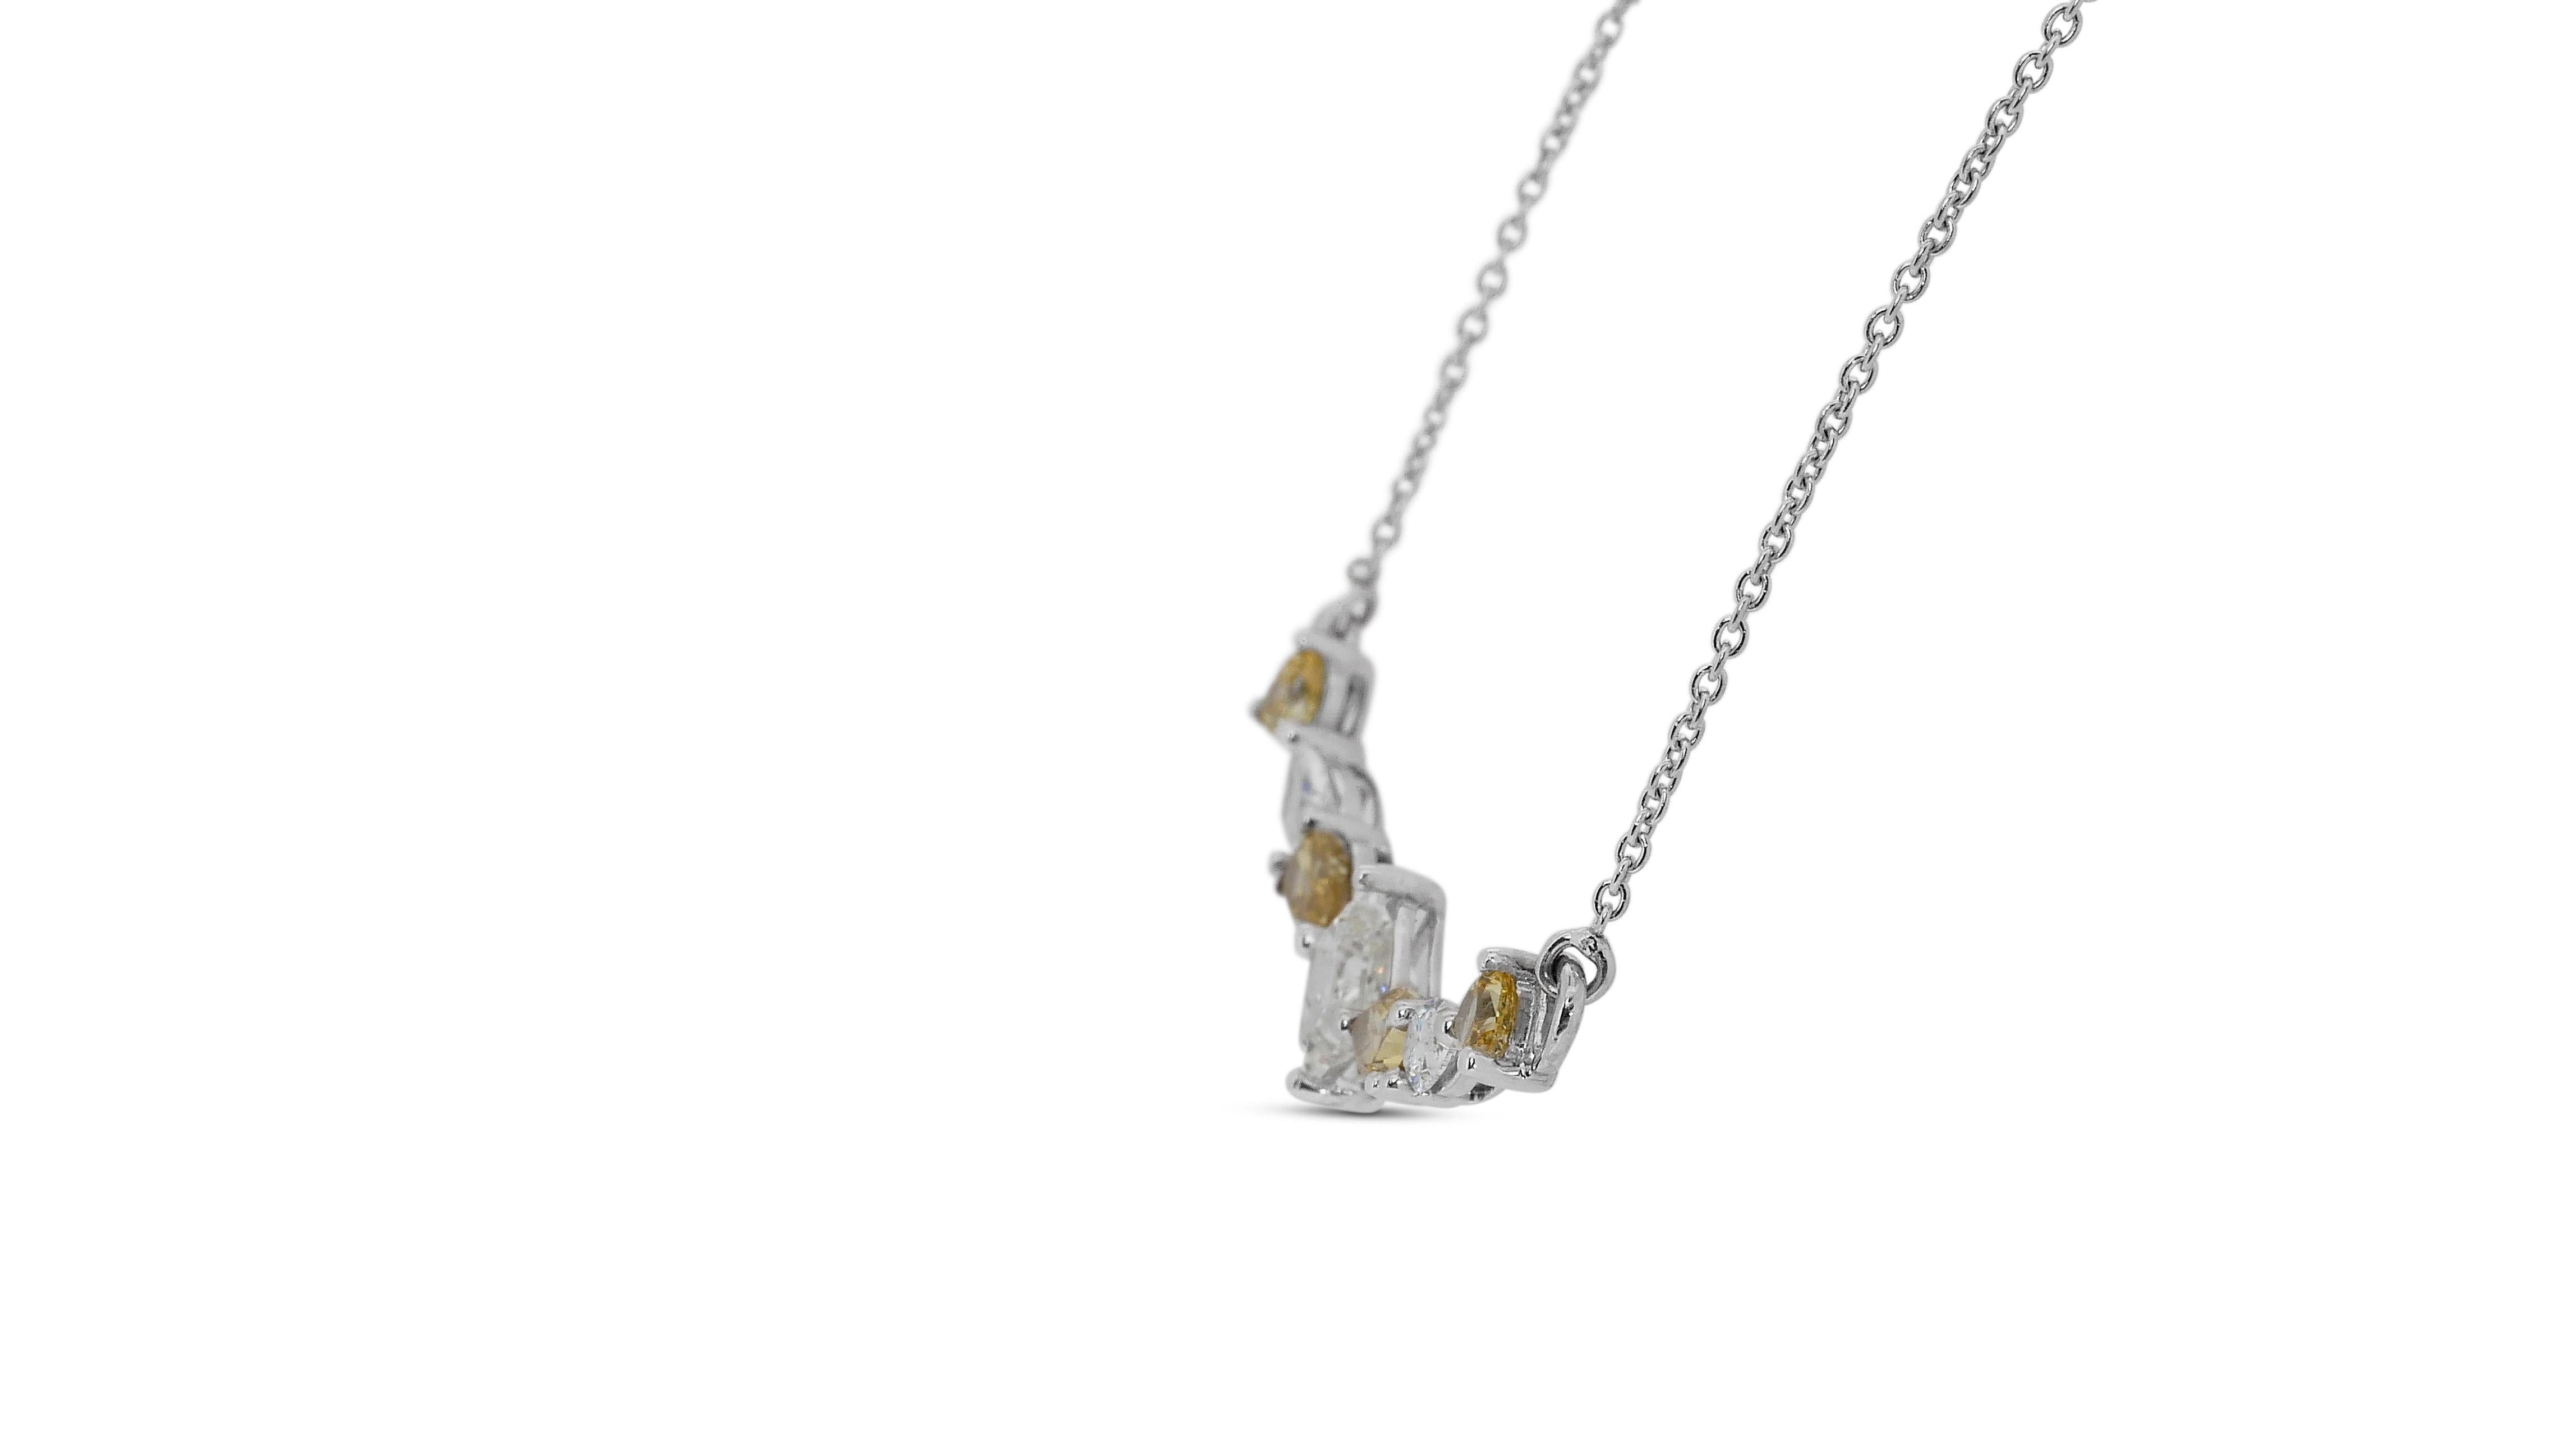 Marvelous 18k White Gold Necklace w/ 1.9 Carat Natural Diamonds IGI Certificate For Sale 2